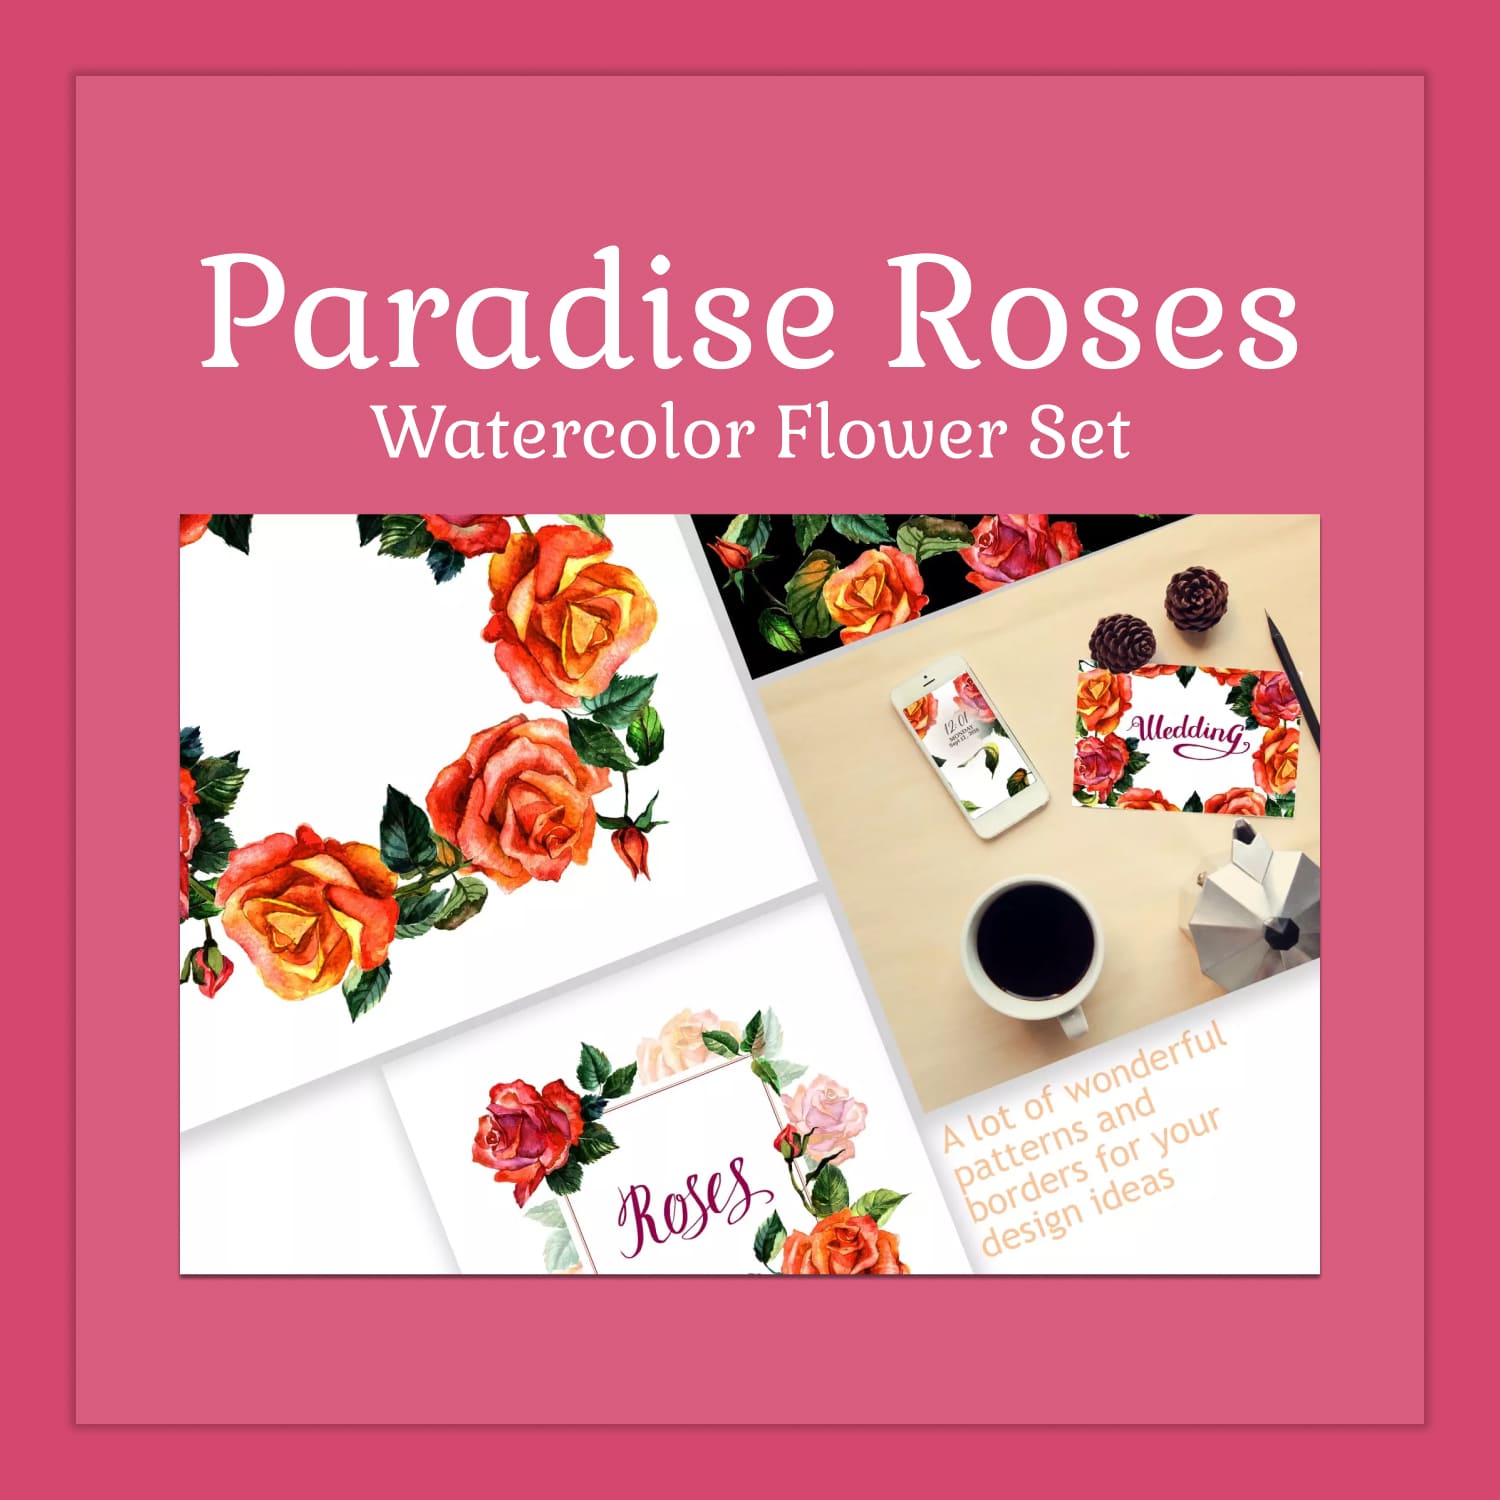 Paradise Roses PNG Watercolor Flower Set main cover.